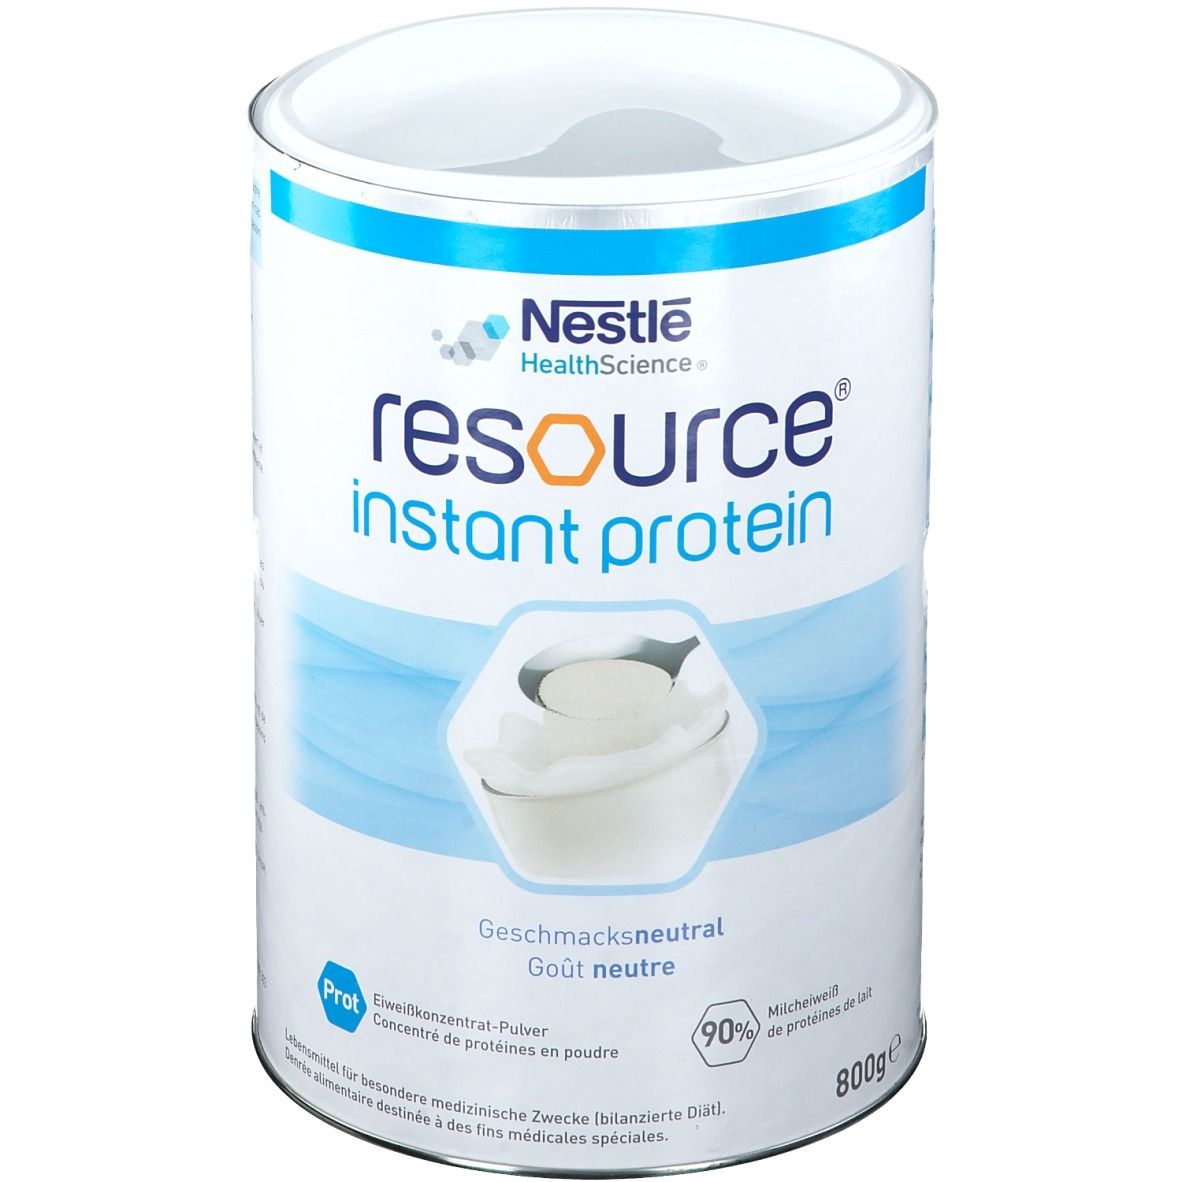 Resource Instant Protein